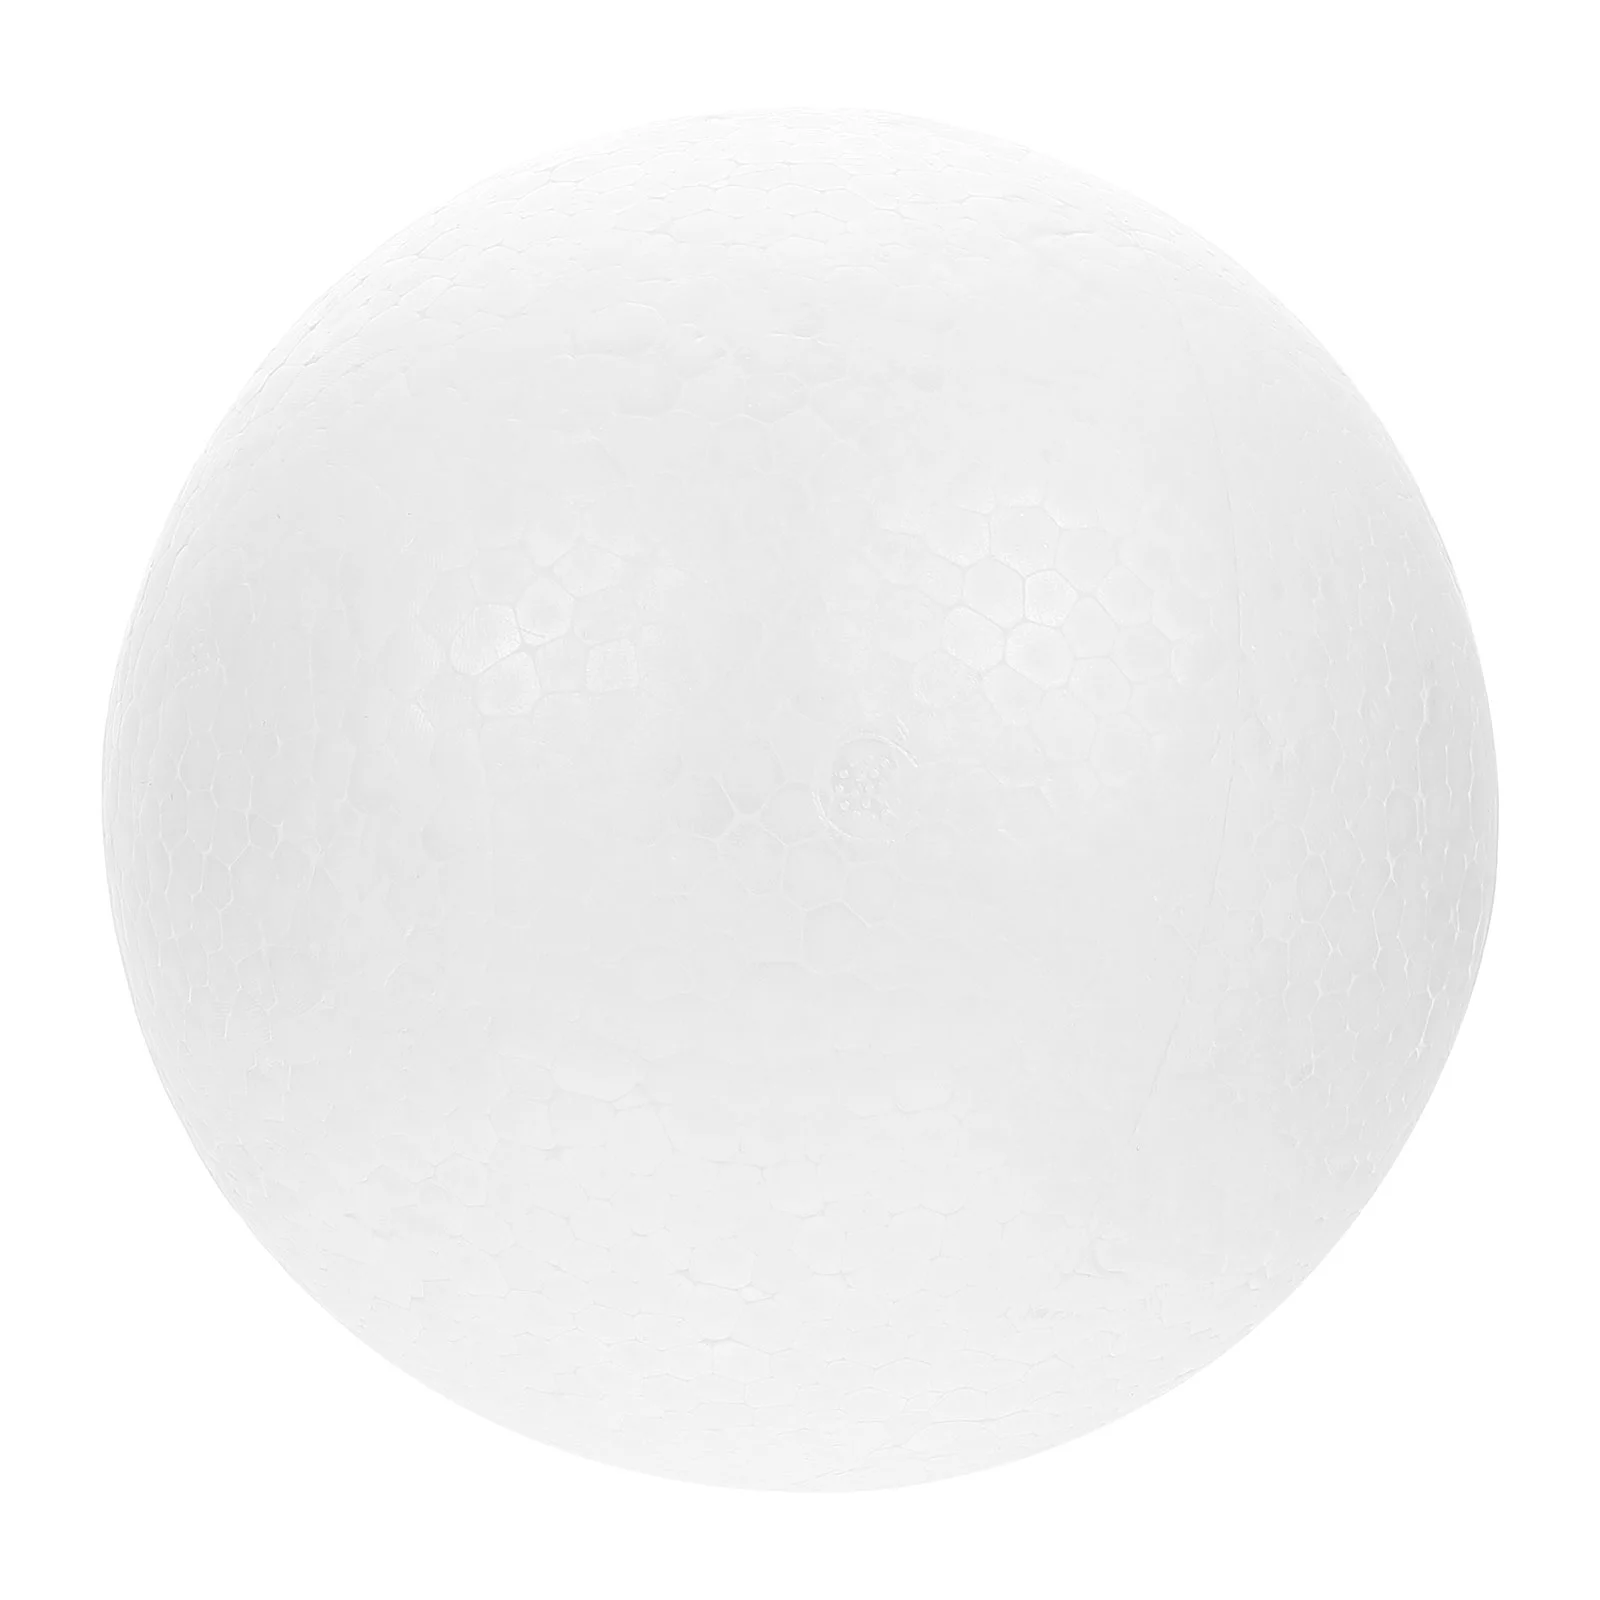 

Cakestyrofoam Polystyrene Dummy Balls Dummies Model Circle Round Supplies Decorating Craft Rounds Practice Shapes White Diy Fake